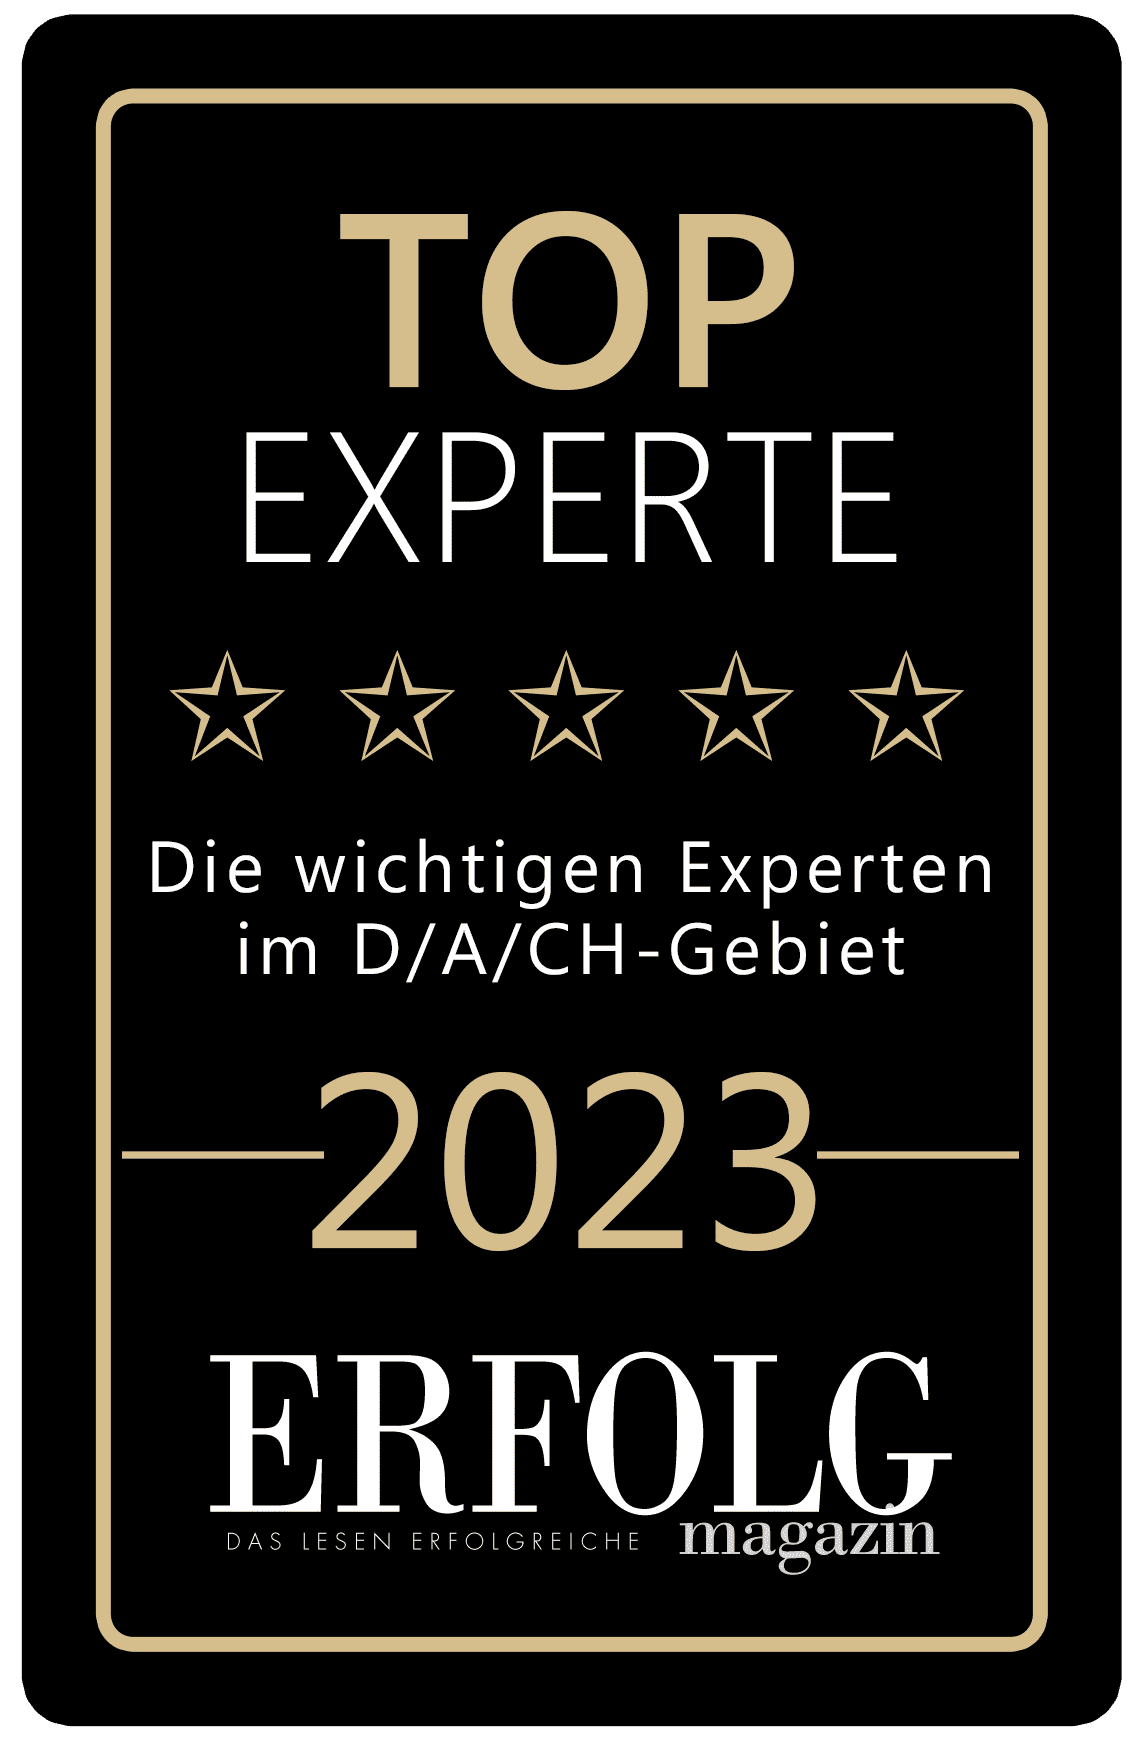 Top_Experte_2023